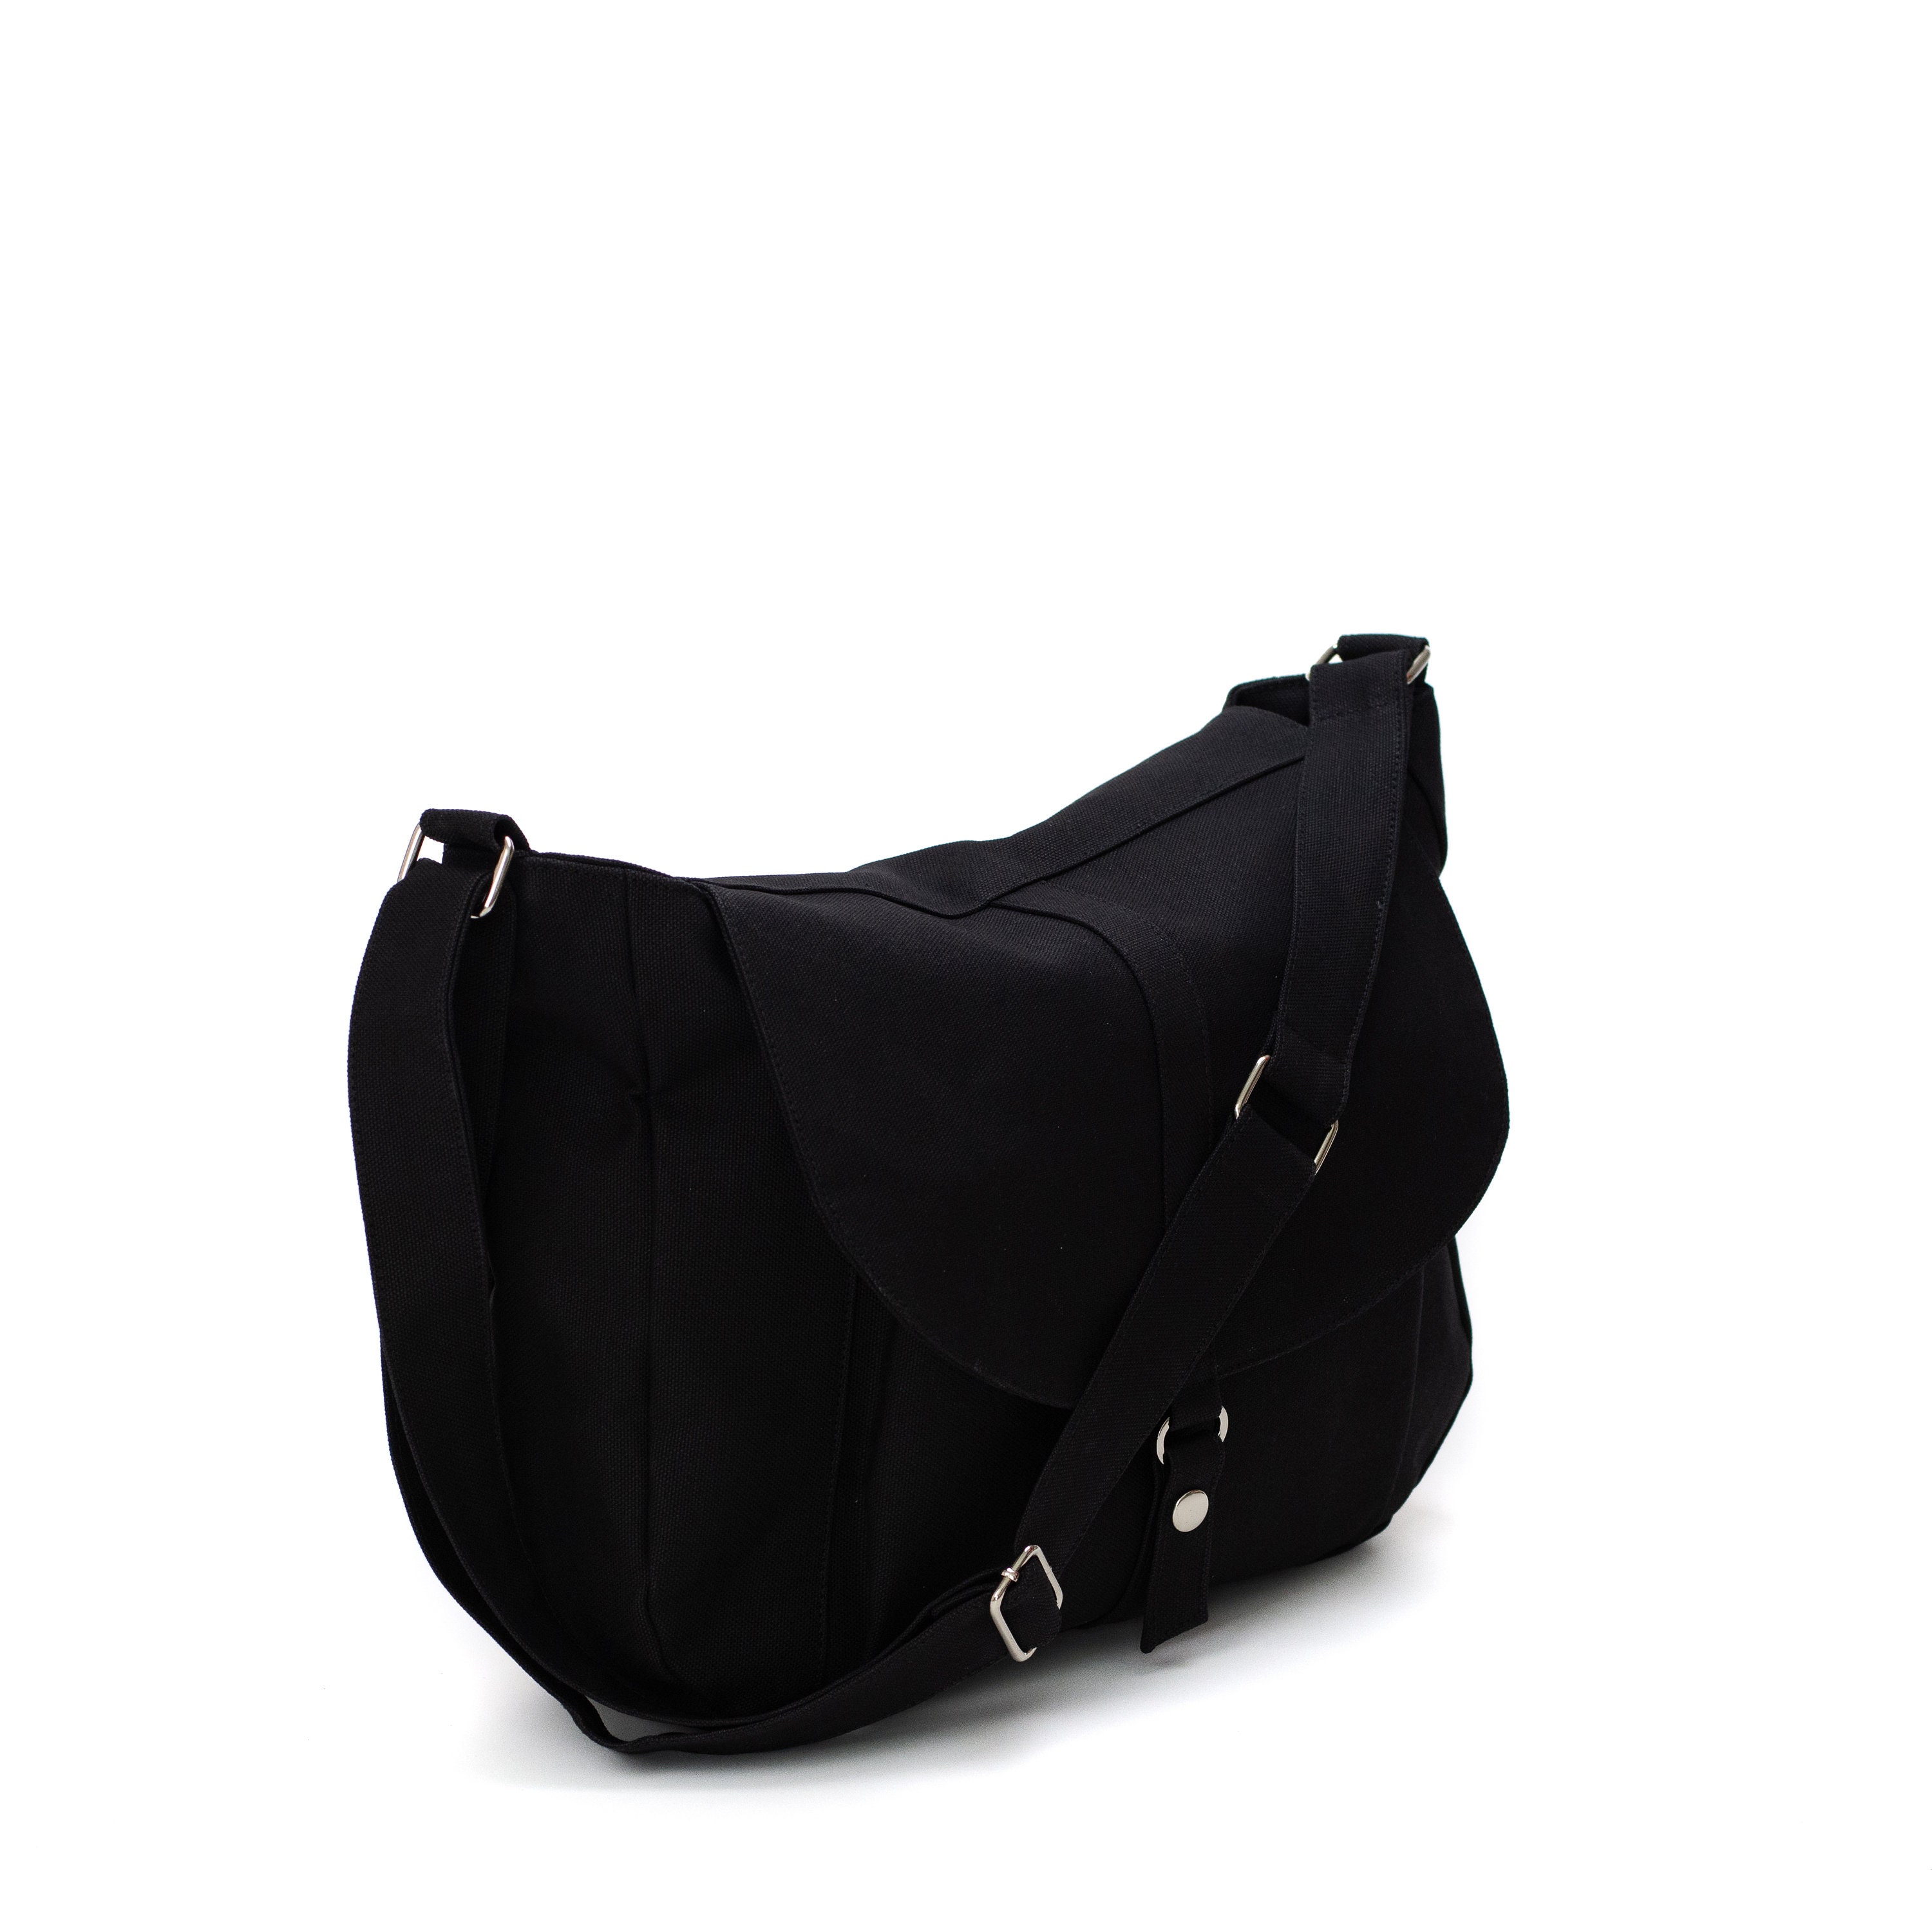  XACKWUERO Women Fashion Classic Denim Canvas Bag Shoulder Handbag  Tote Shopper Bag with Chain Shoulder Strap (B Black) : Clothing, Shoes &  Jewelry